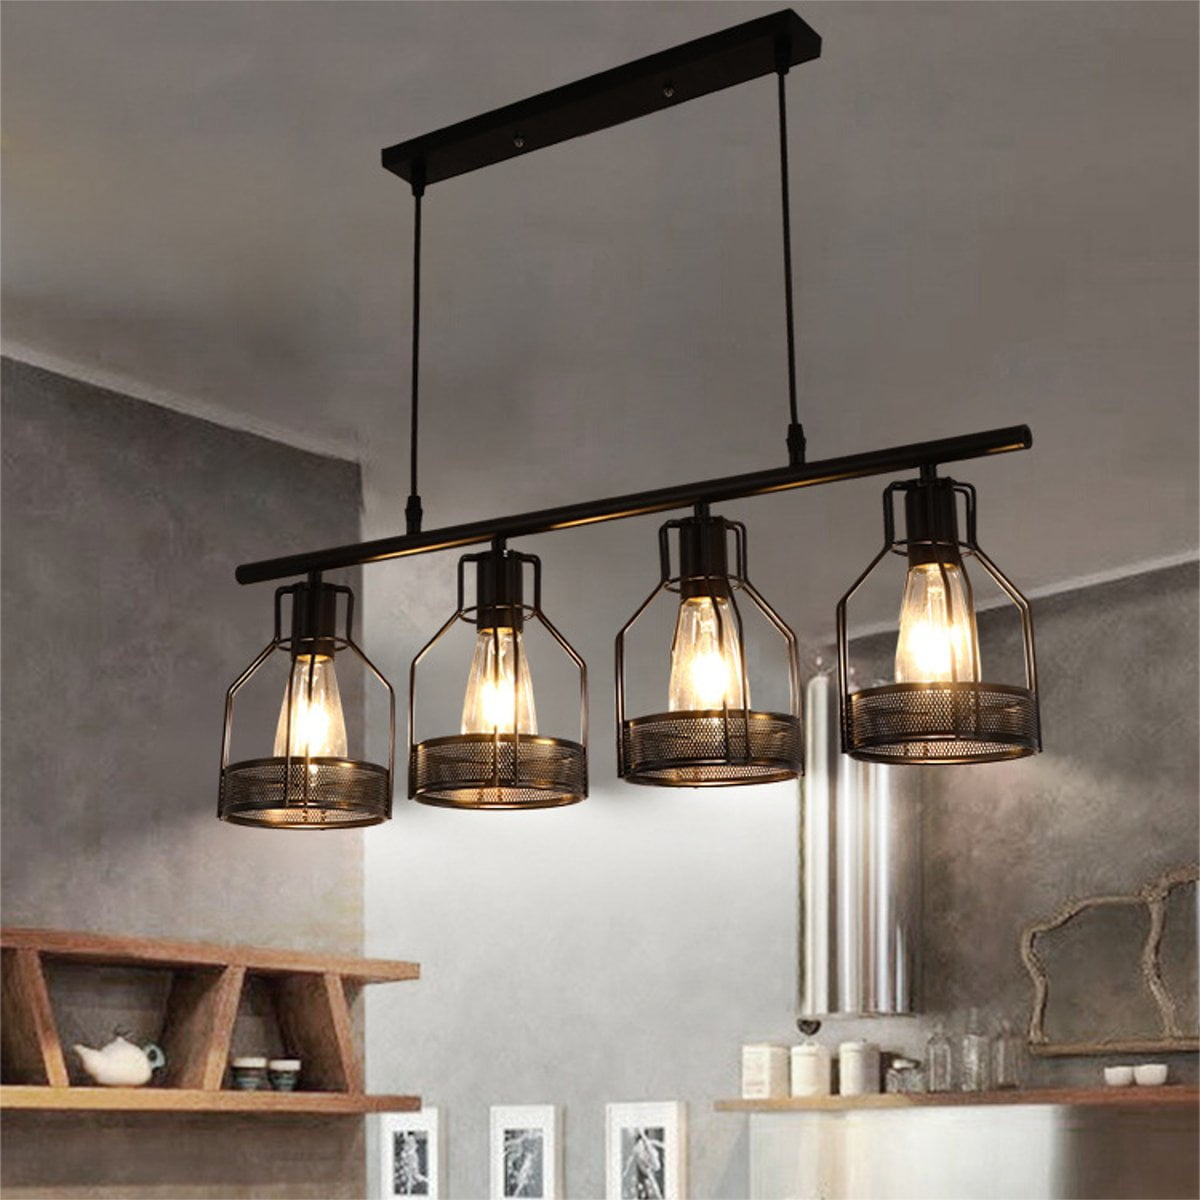 Retro Industrial Black Pendant Lights E27 LED Hanging Lamps Ceiling Fixtures 